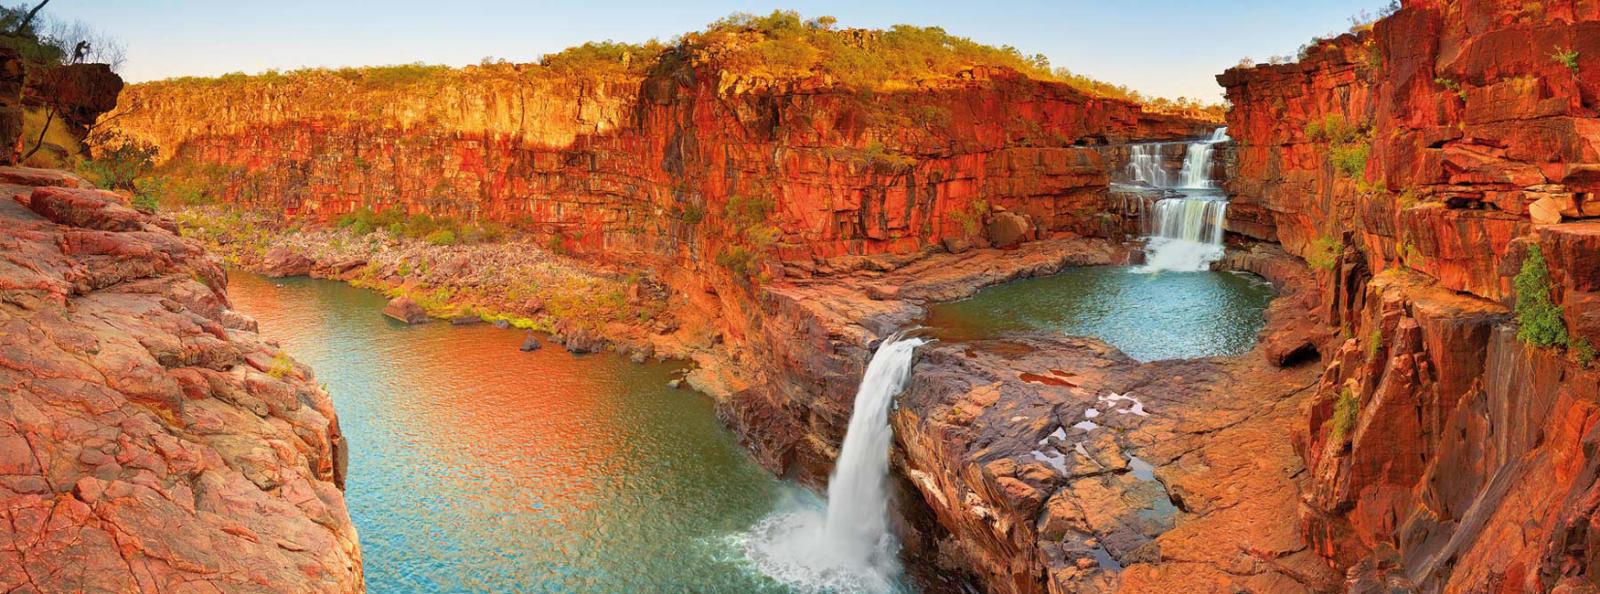 Kimberly Western Australia Waterfall